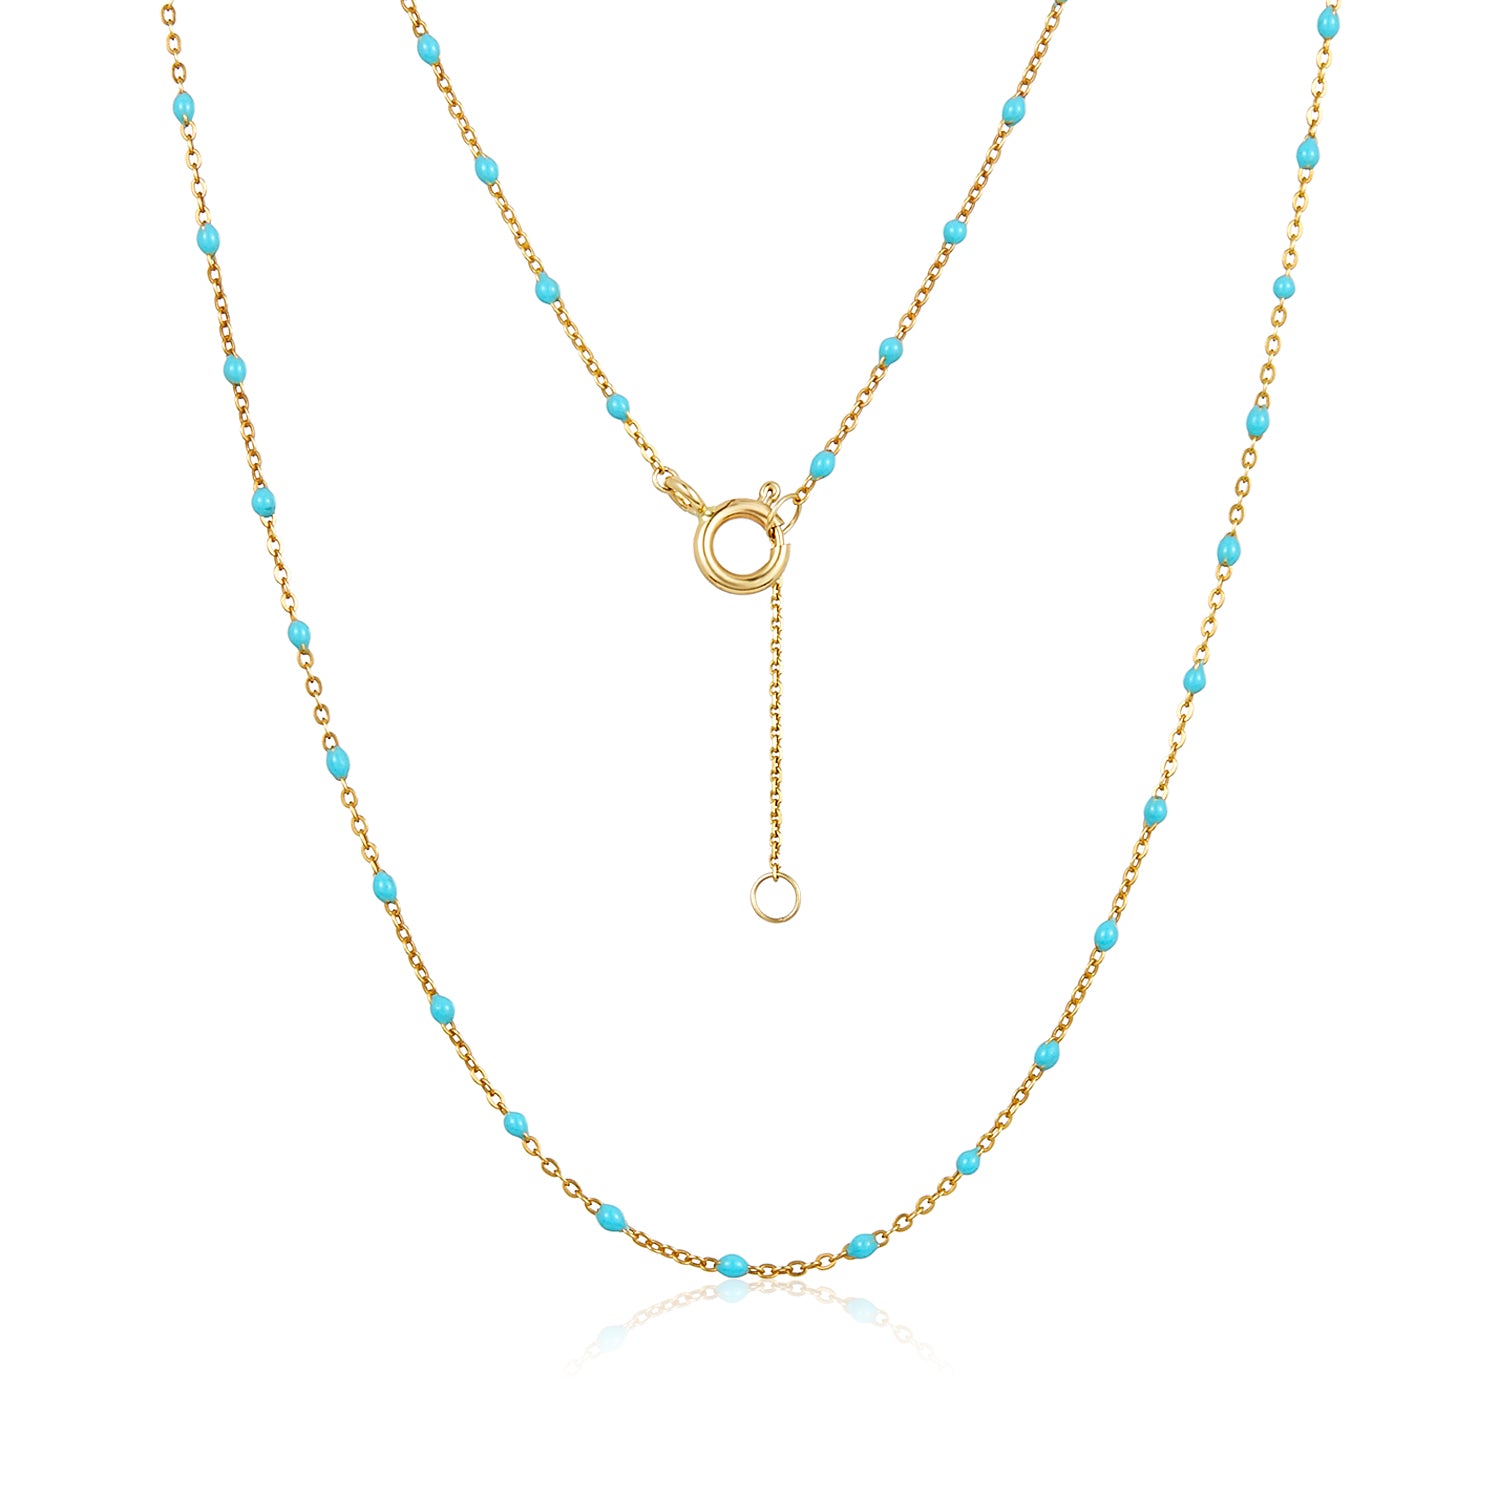 Enamel Turquoise Necklace in 14k